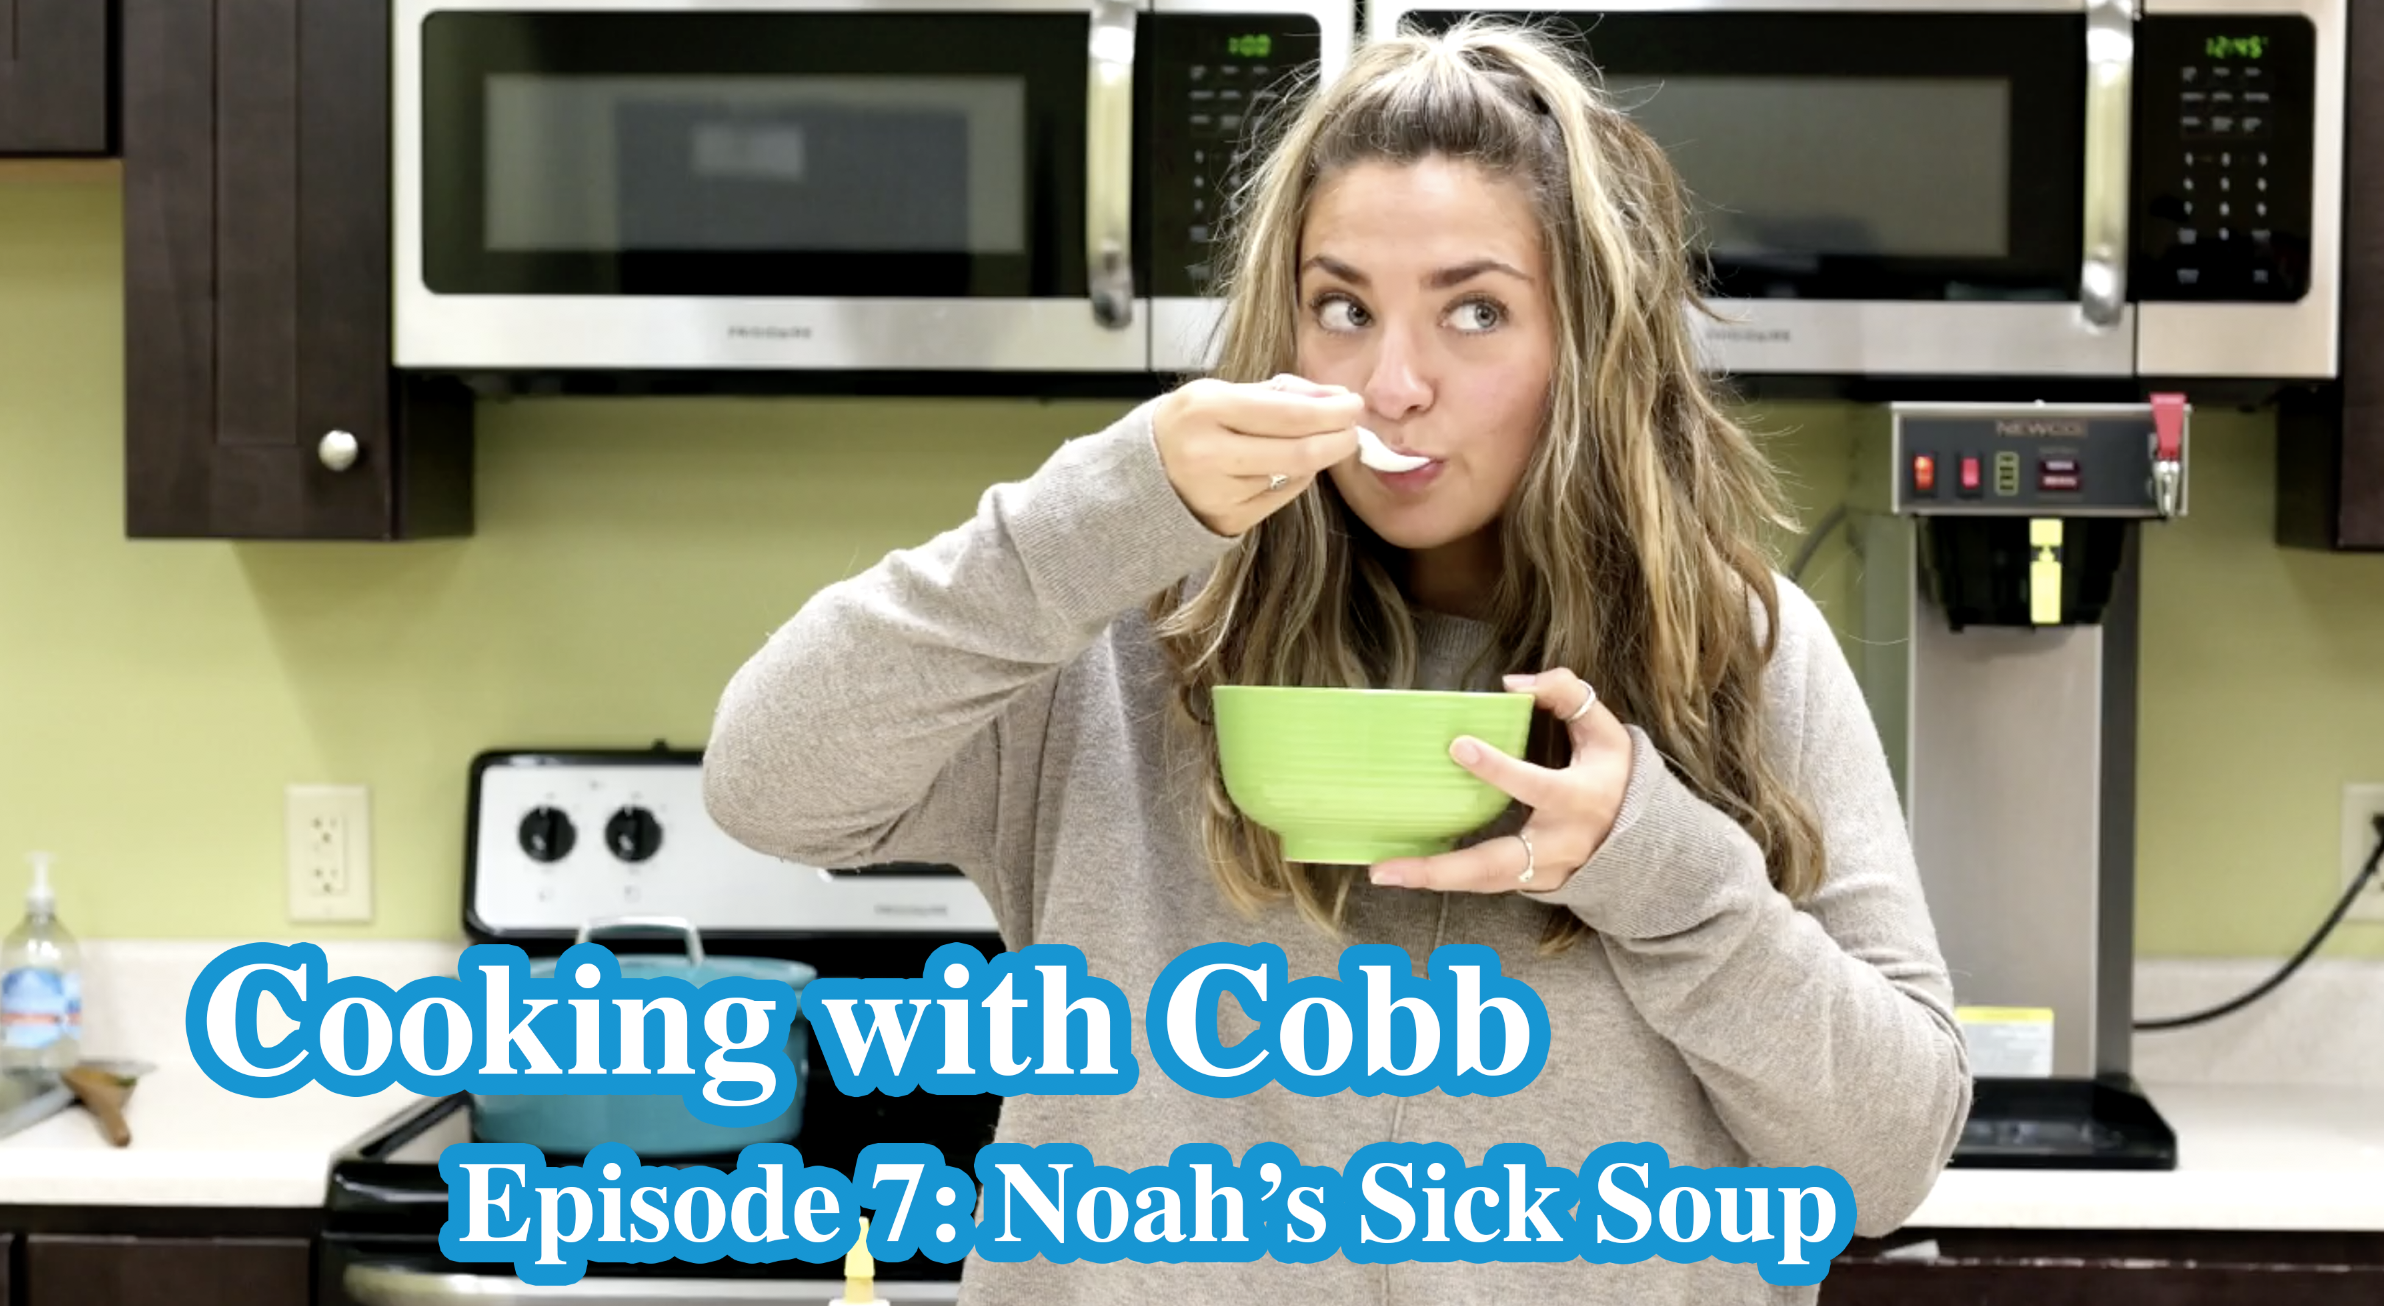 Cooking With Cobb Episode 7 - Noah's Sick Soup